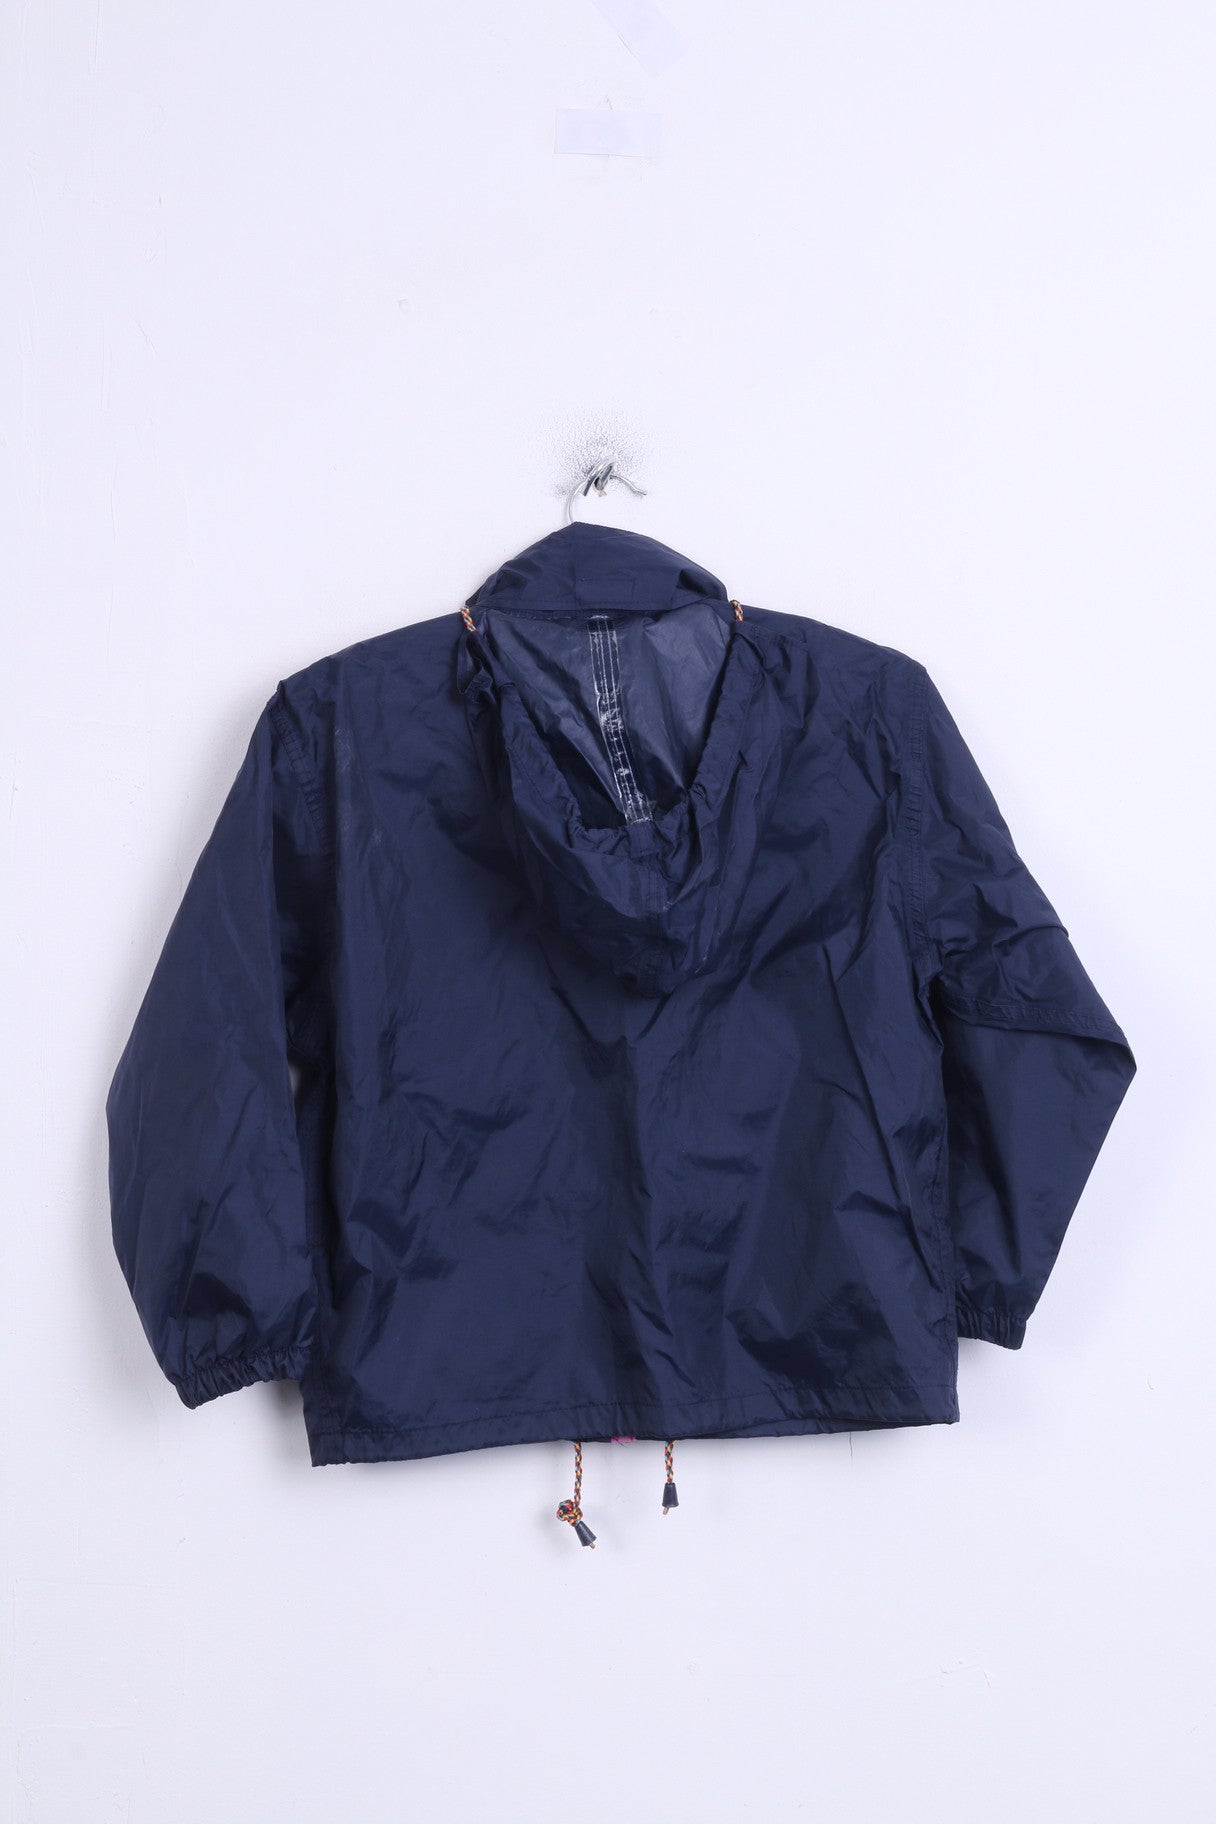 Etirel le style sportif Boys 128 Jacket Navy Hood Nylon Waterproof - RetrospectClothes